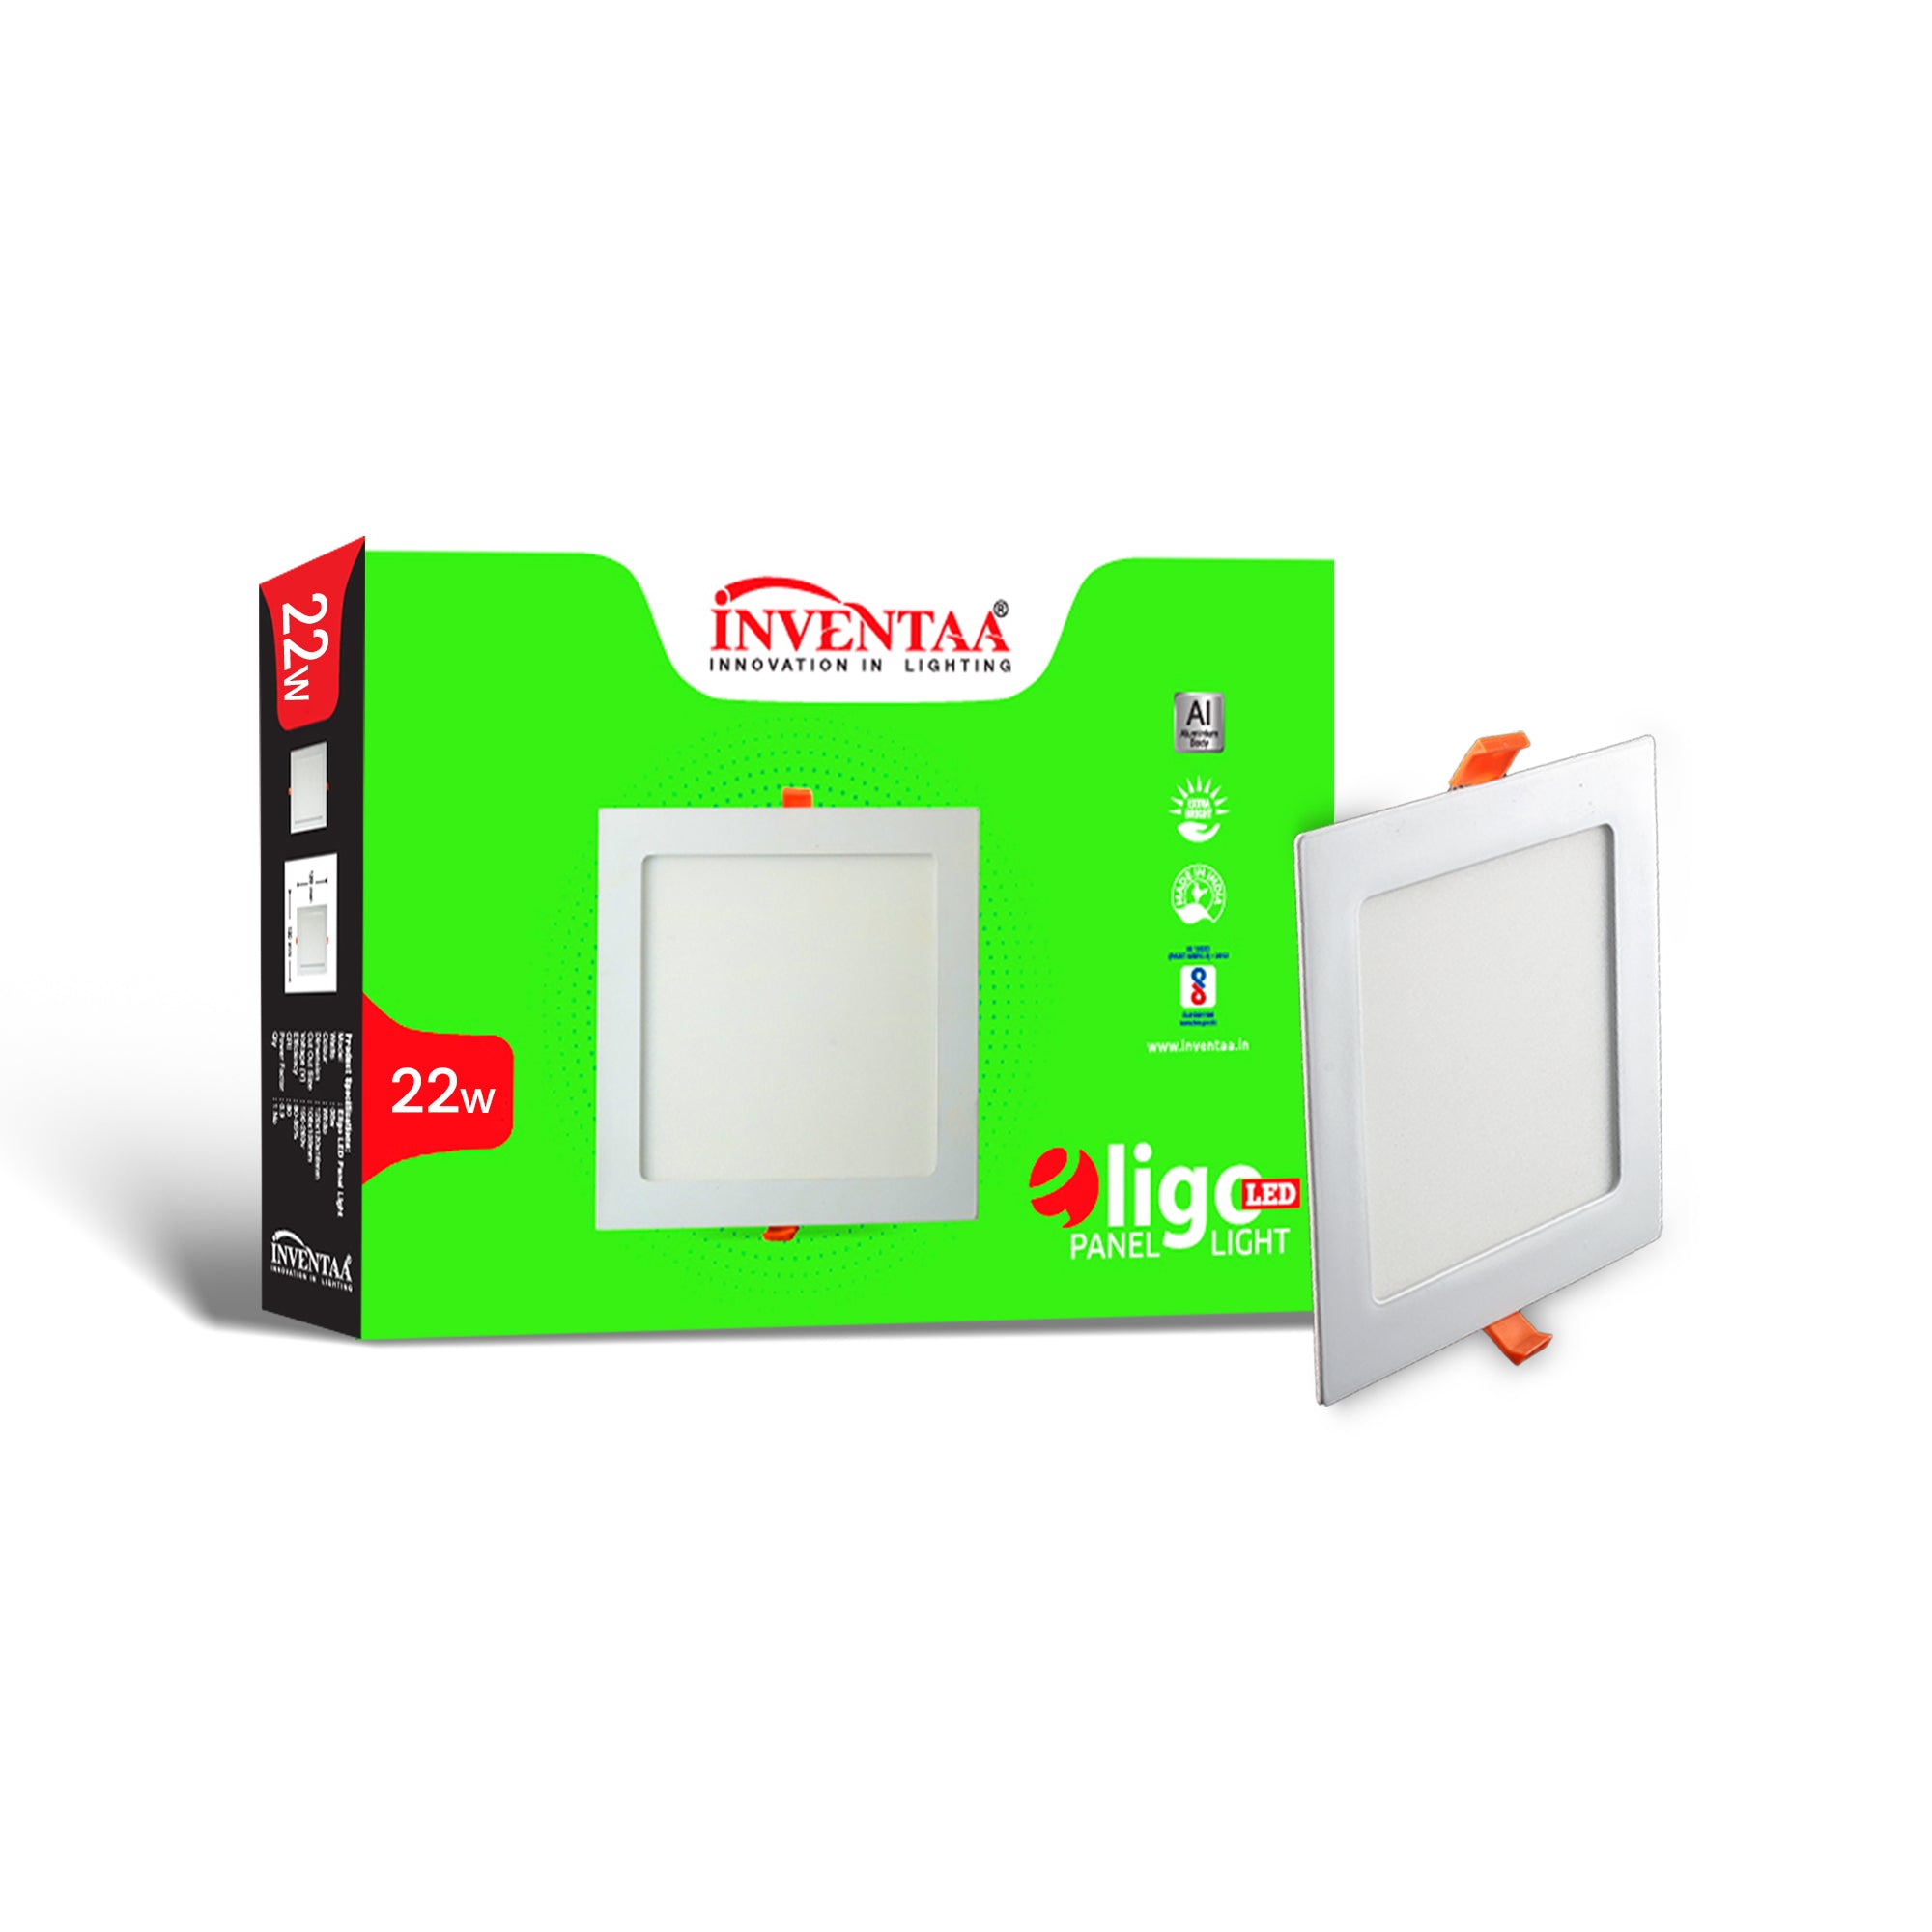 Eligo square 22w led panel light with its box enclosure #watts_22w